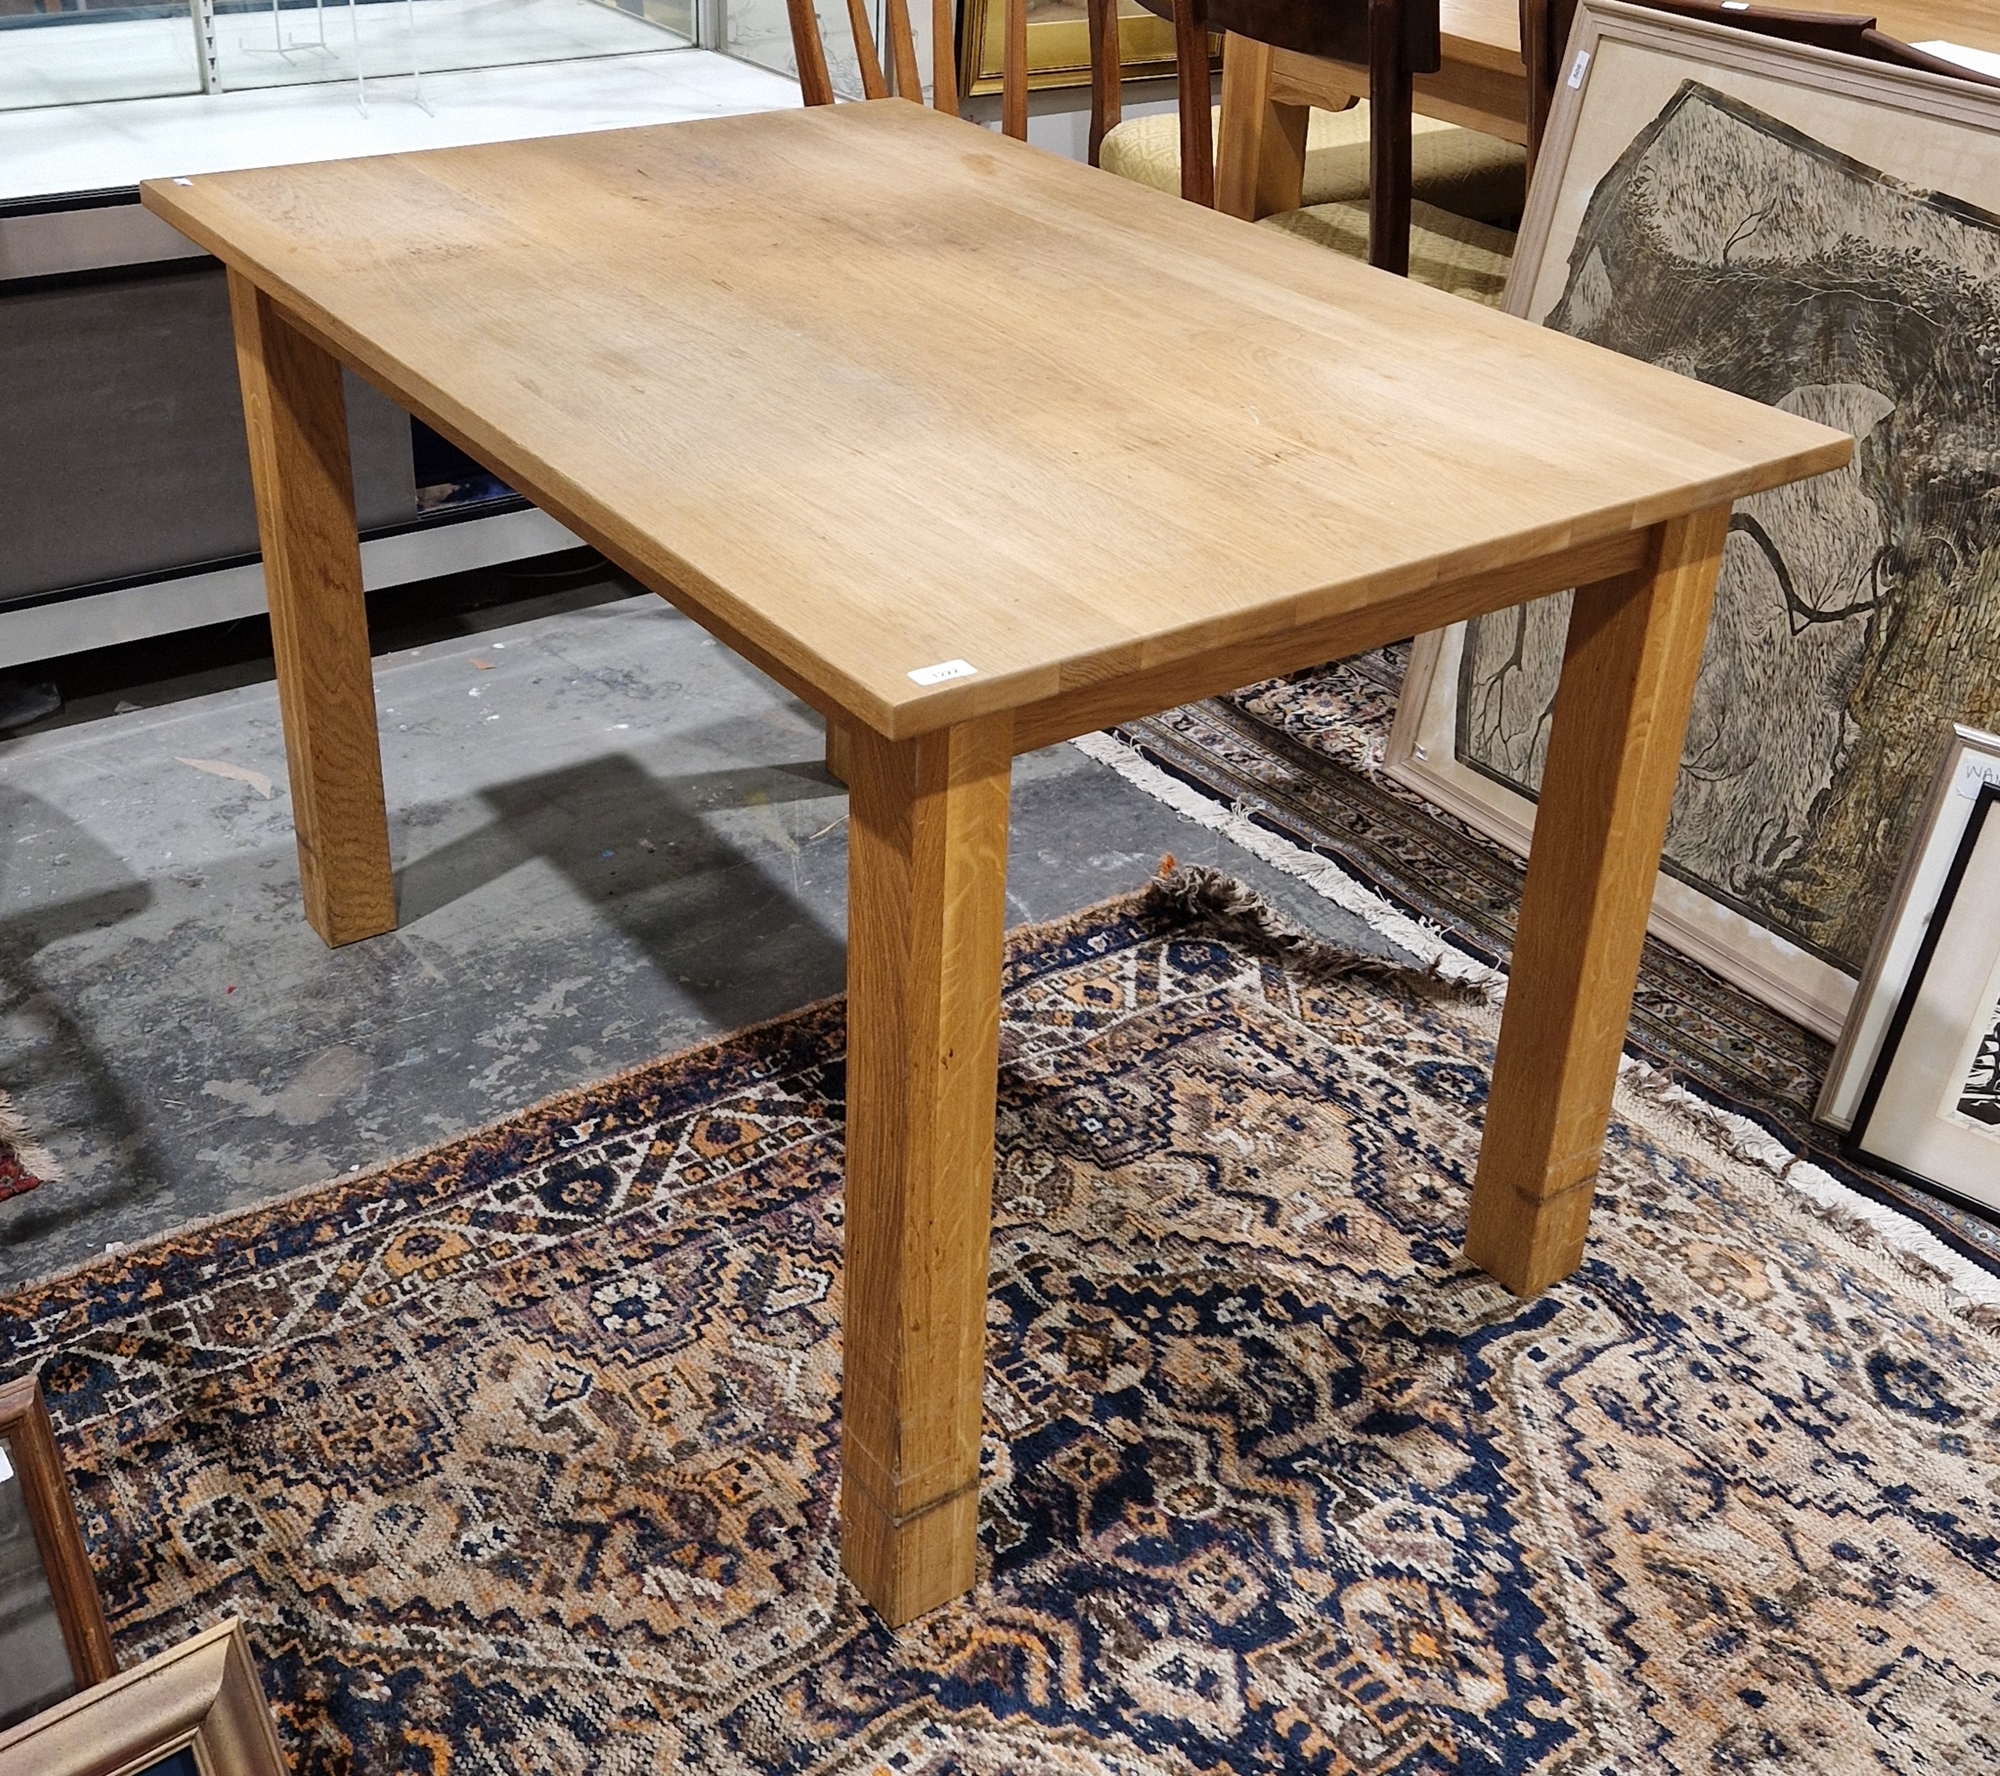 Small oak kitchen dining table, rectangular, 76cm high x 80cm wide x 119cm long